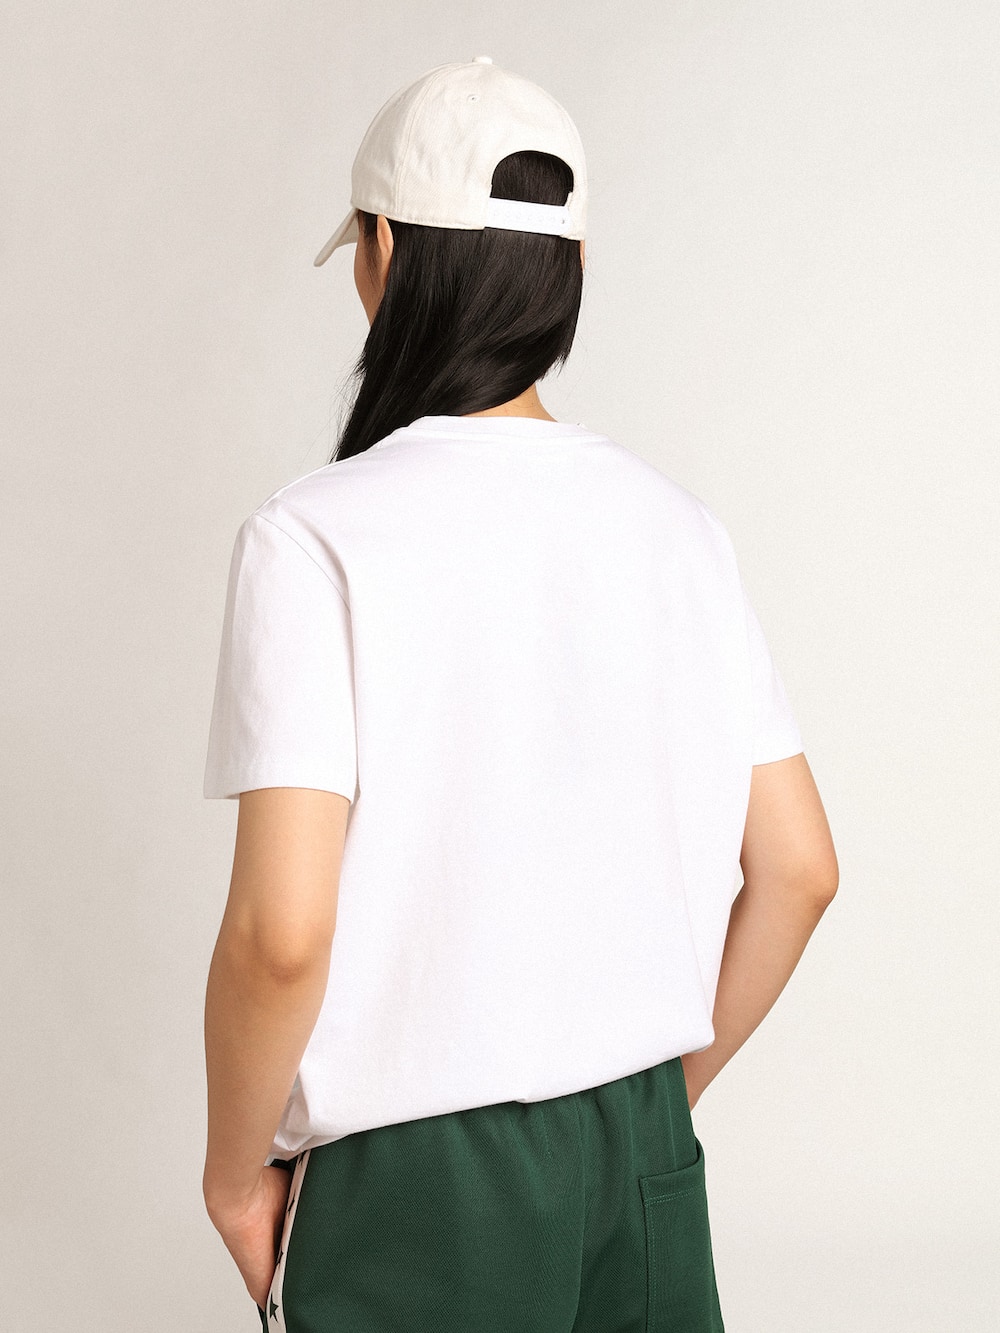 Golden Goose - T-shirt bianca da donna con stella verde sul davanti in 